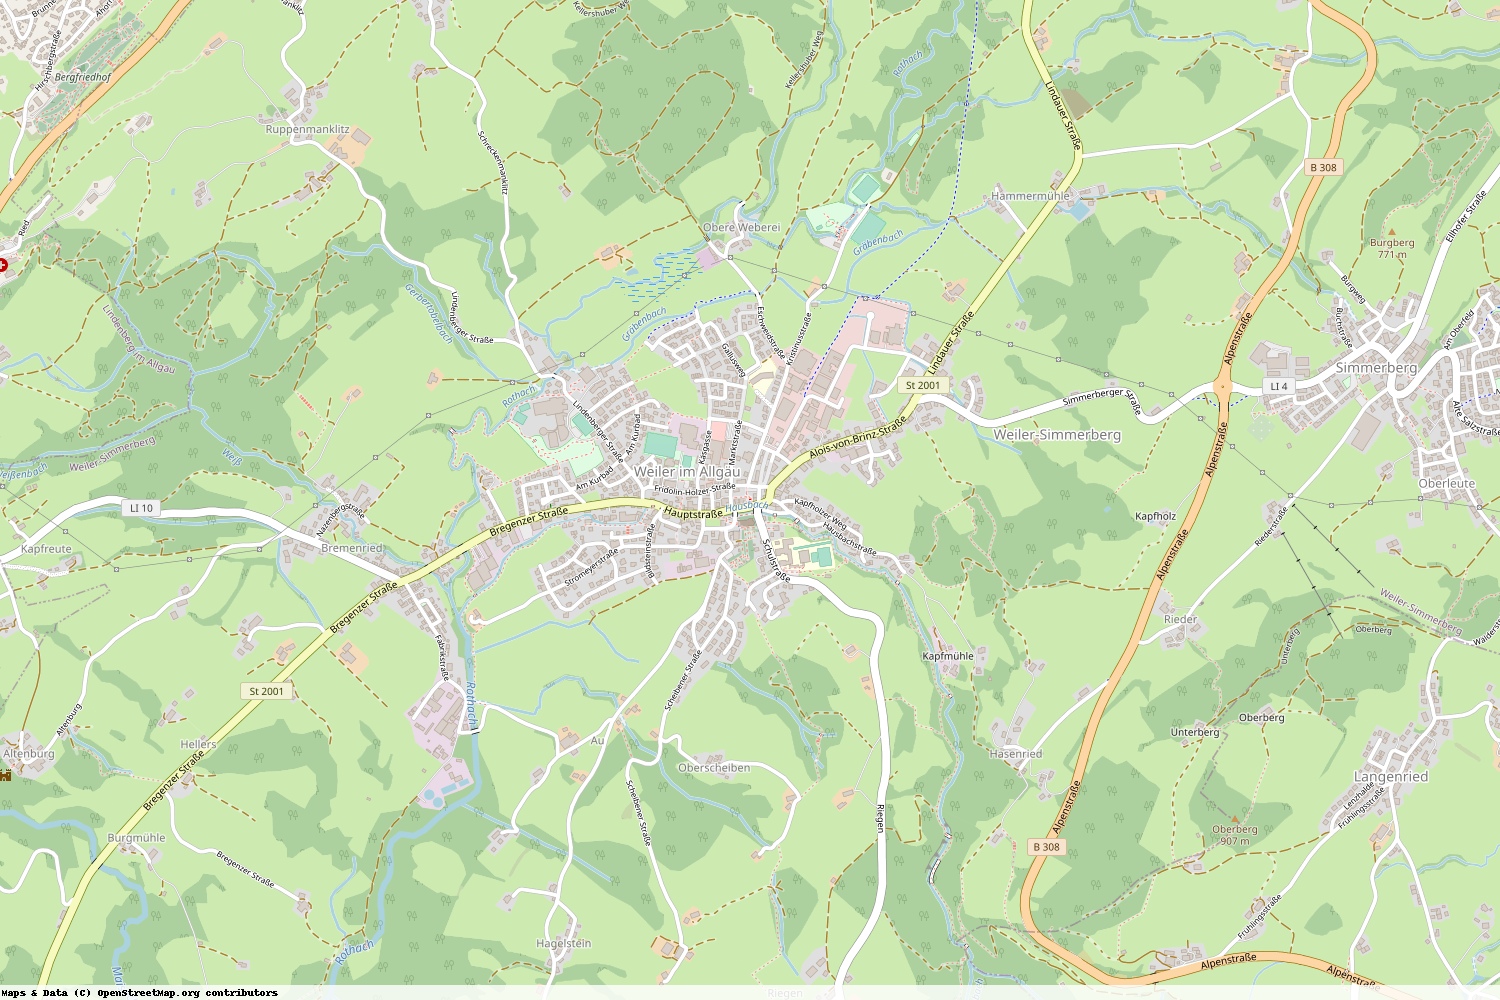 Ist gerade Stromausfall in Bayern - Lindau (Bodensee) - Weiler-Simmerberg?